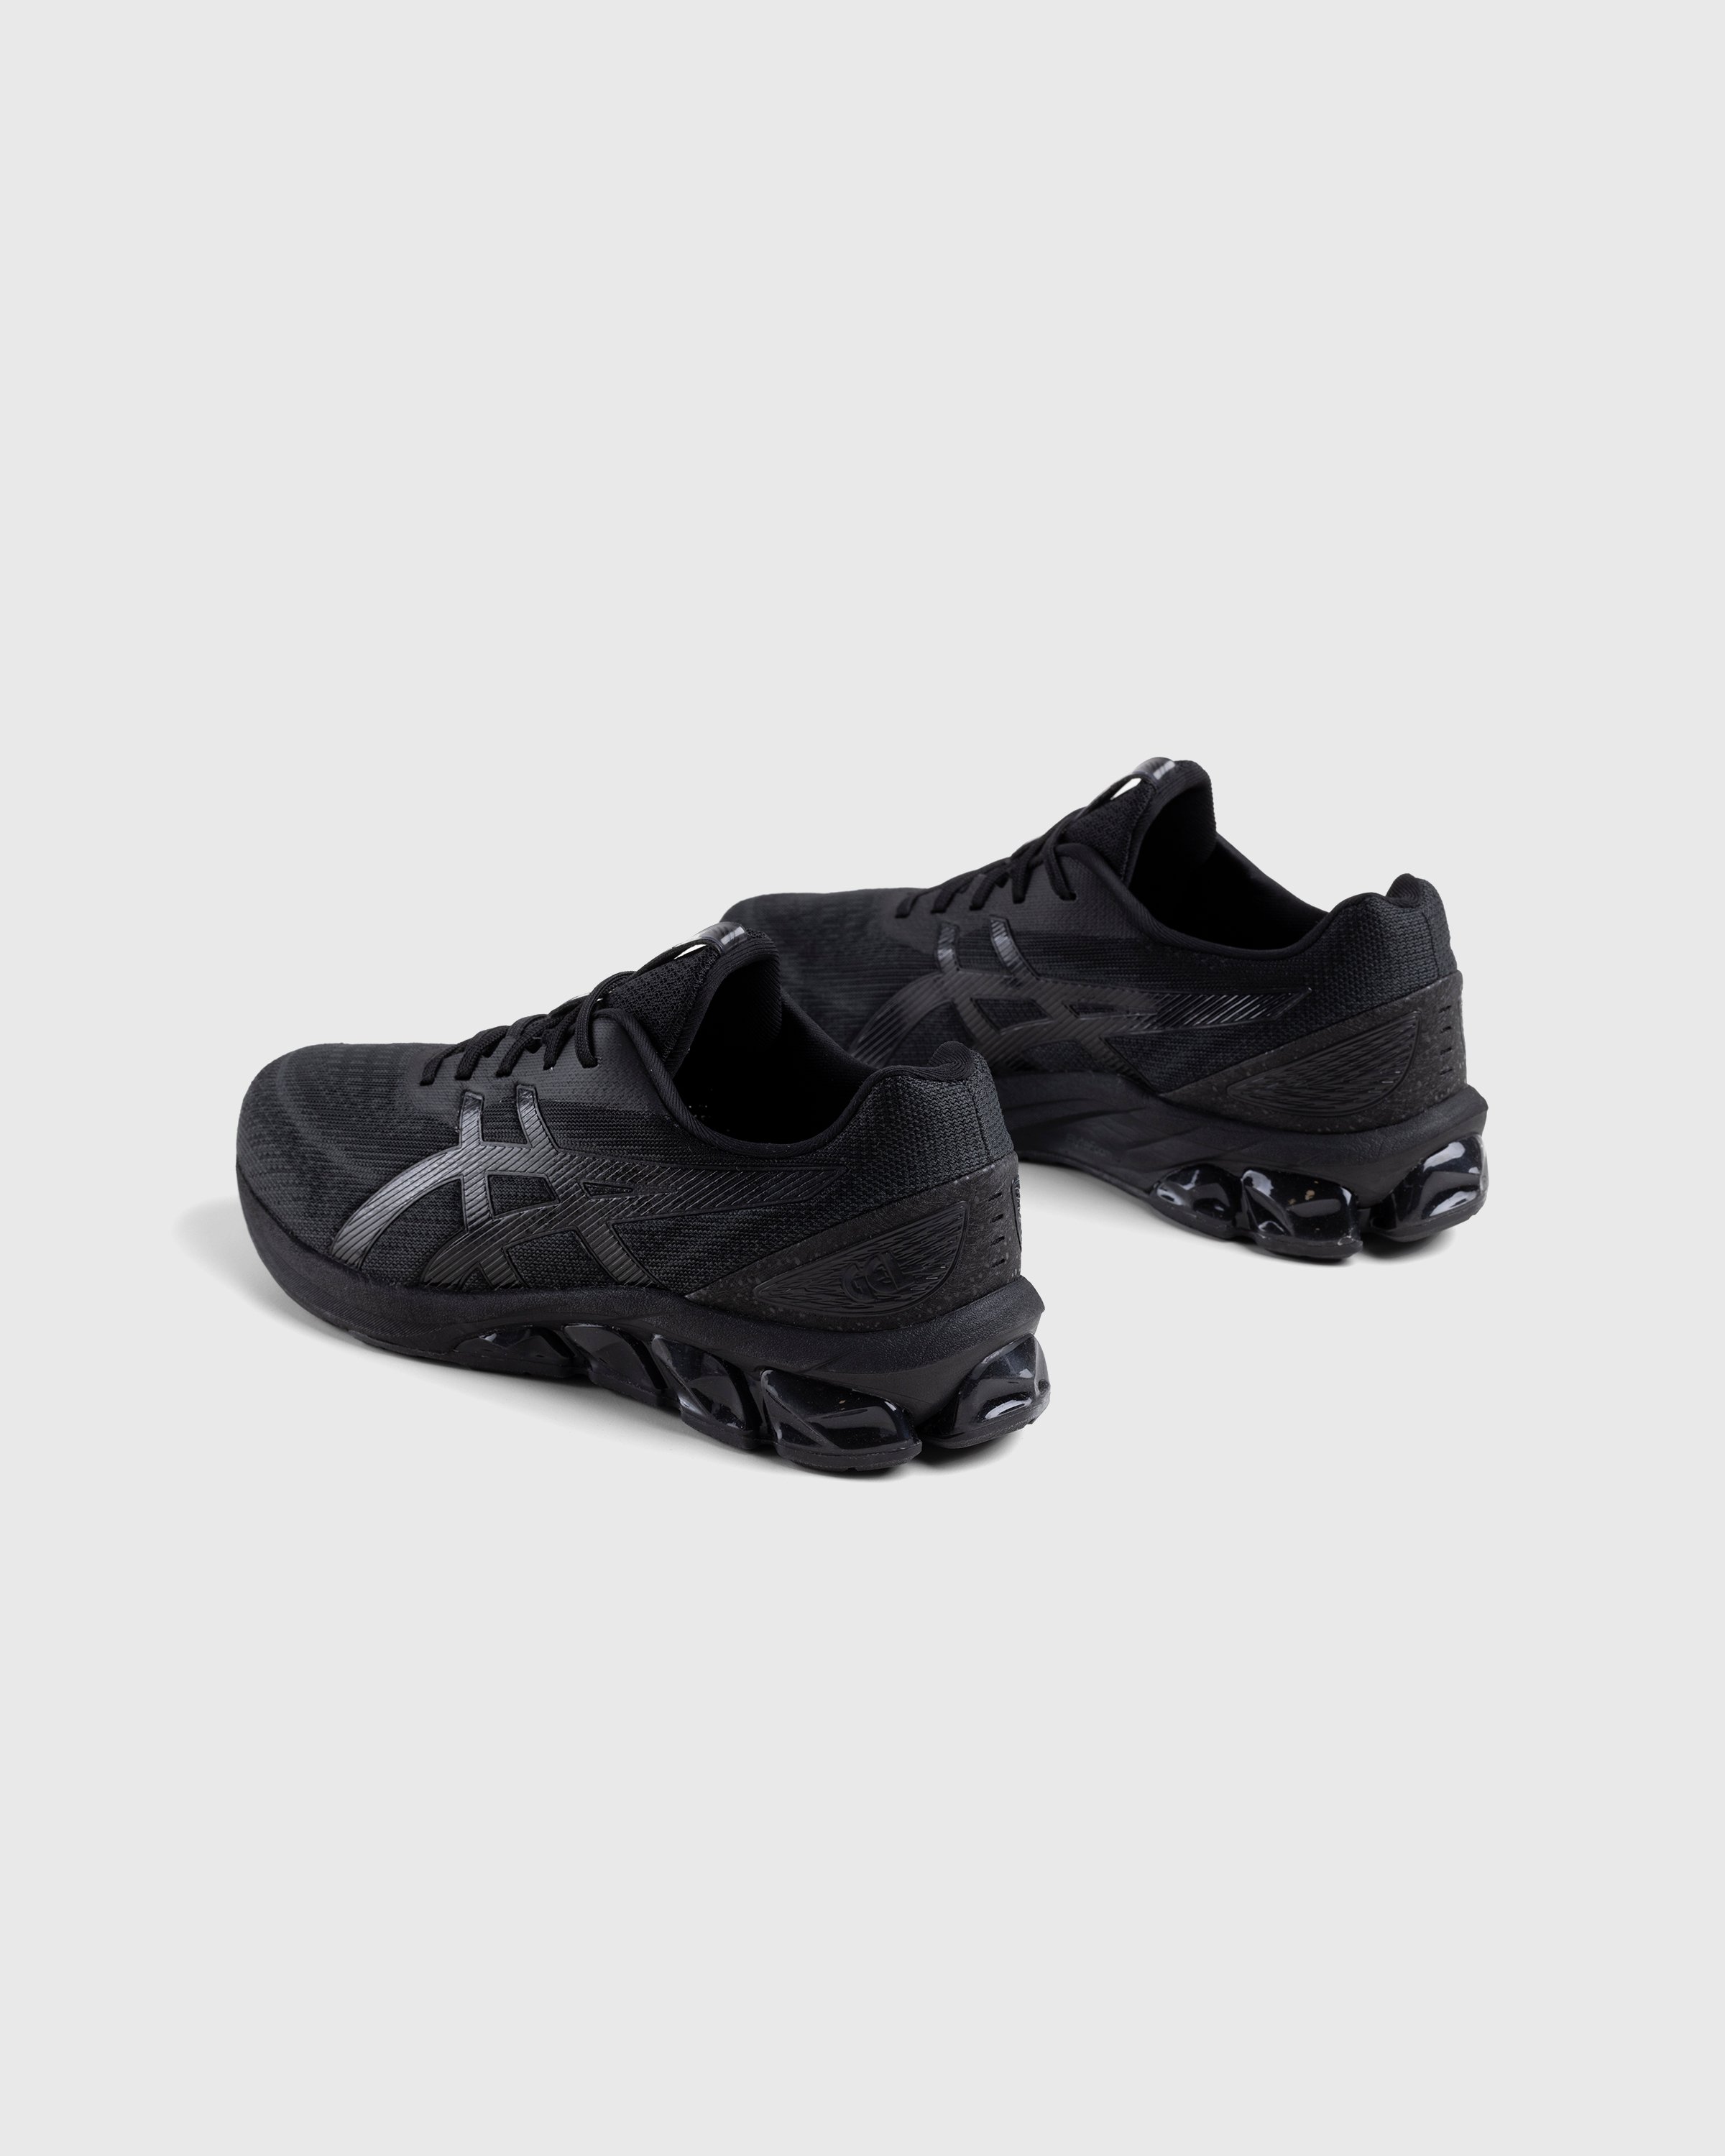 asics - Gel-Quantum 180 VII Black/Black - Footwear - Black - Image 4